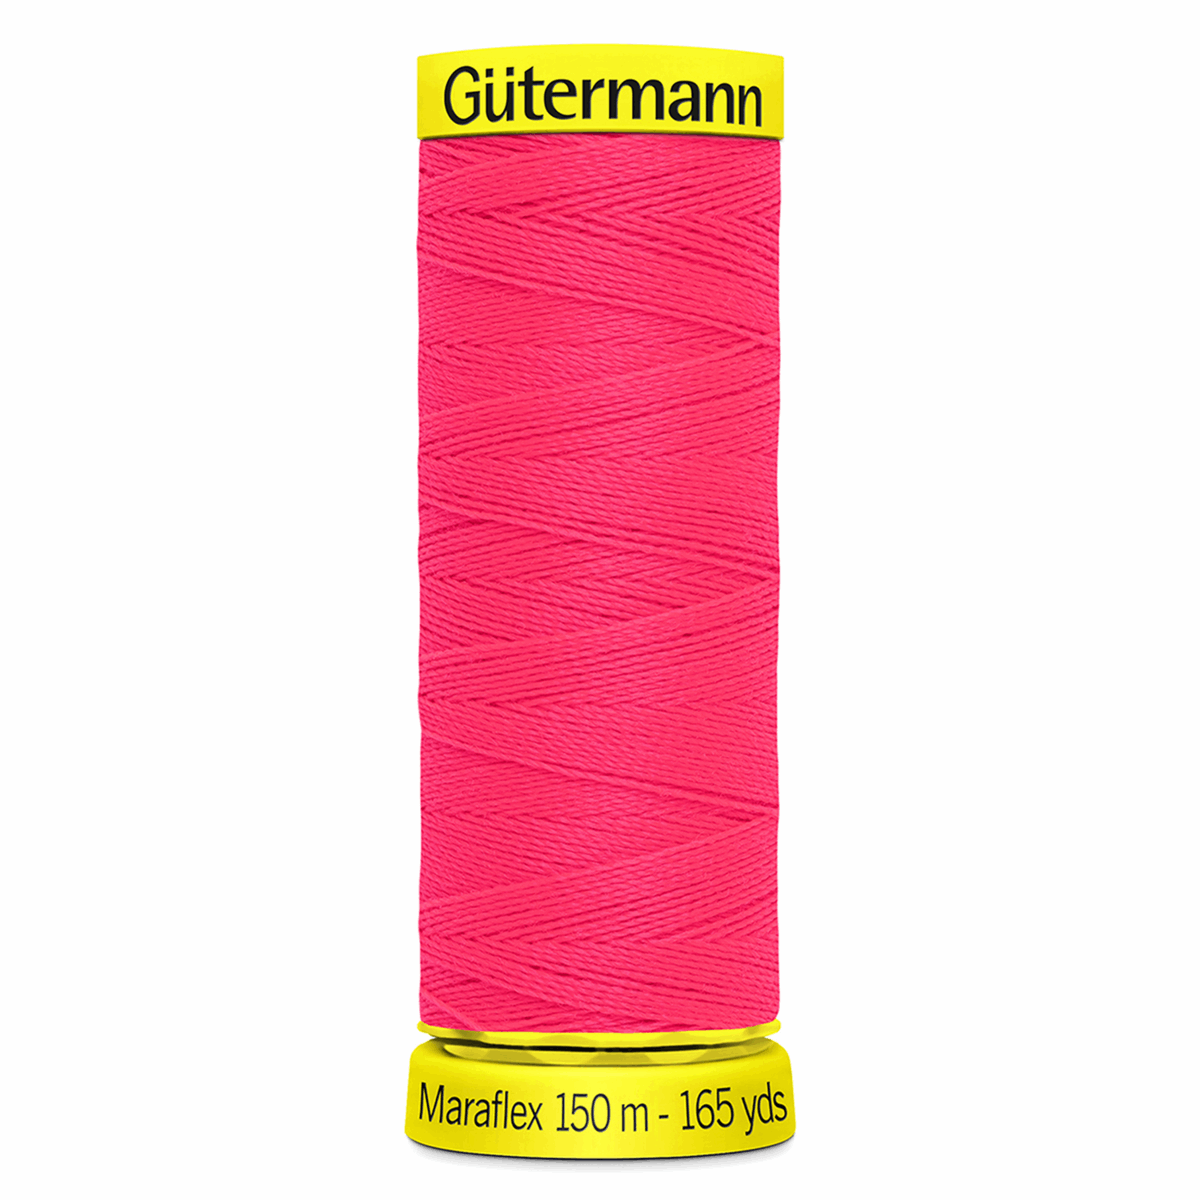 Gutermann Maraflex Elastic Sewing Thread 150m Neon Pink 3837